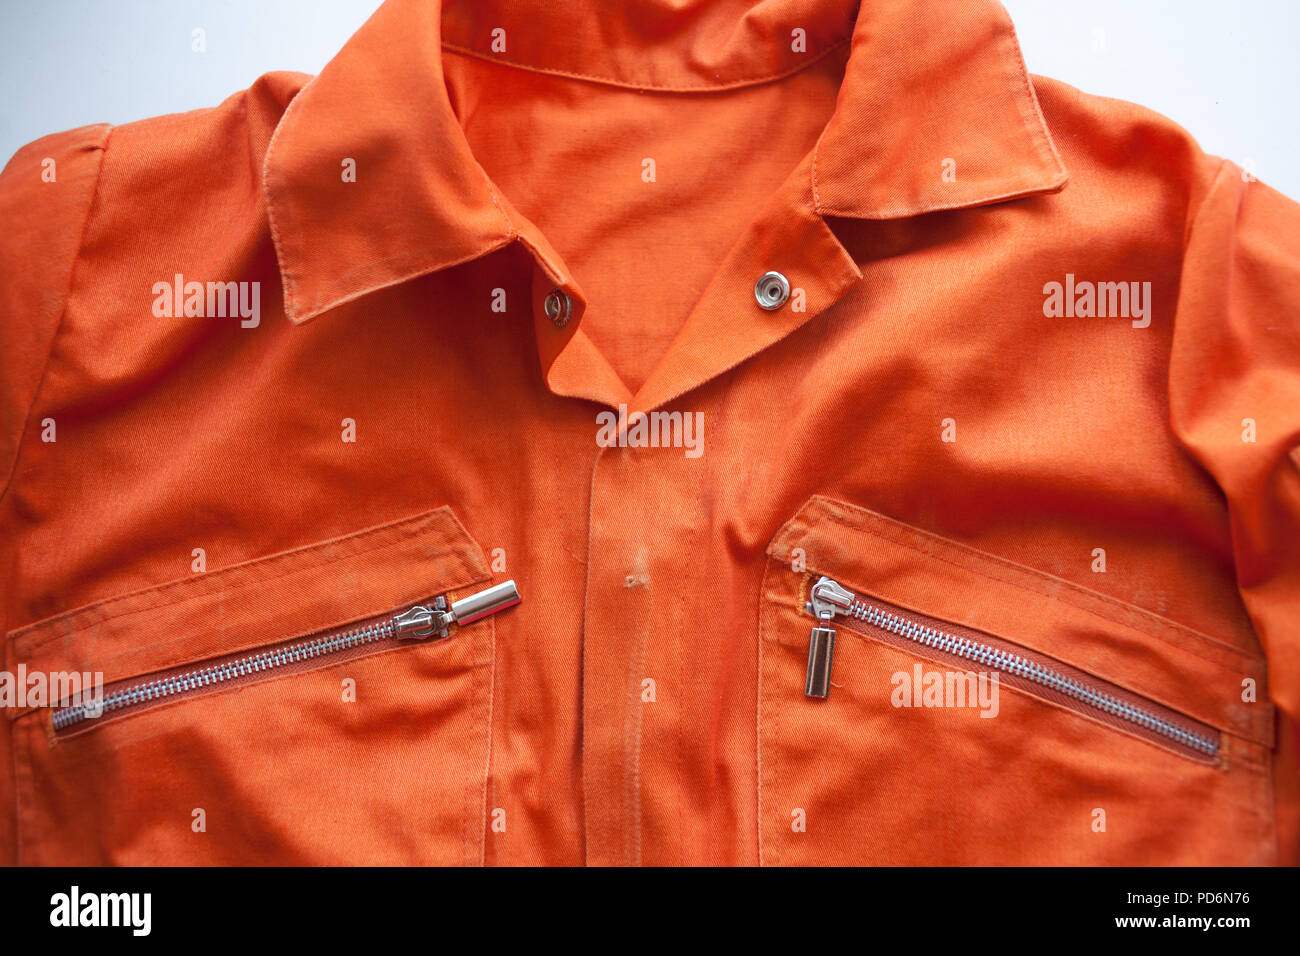 An orange jumpsuit of a prisoner. close up. Prison clothes, prisoner overalls Stock Photo